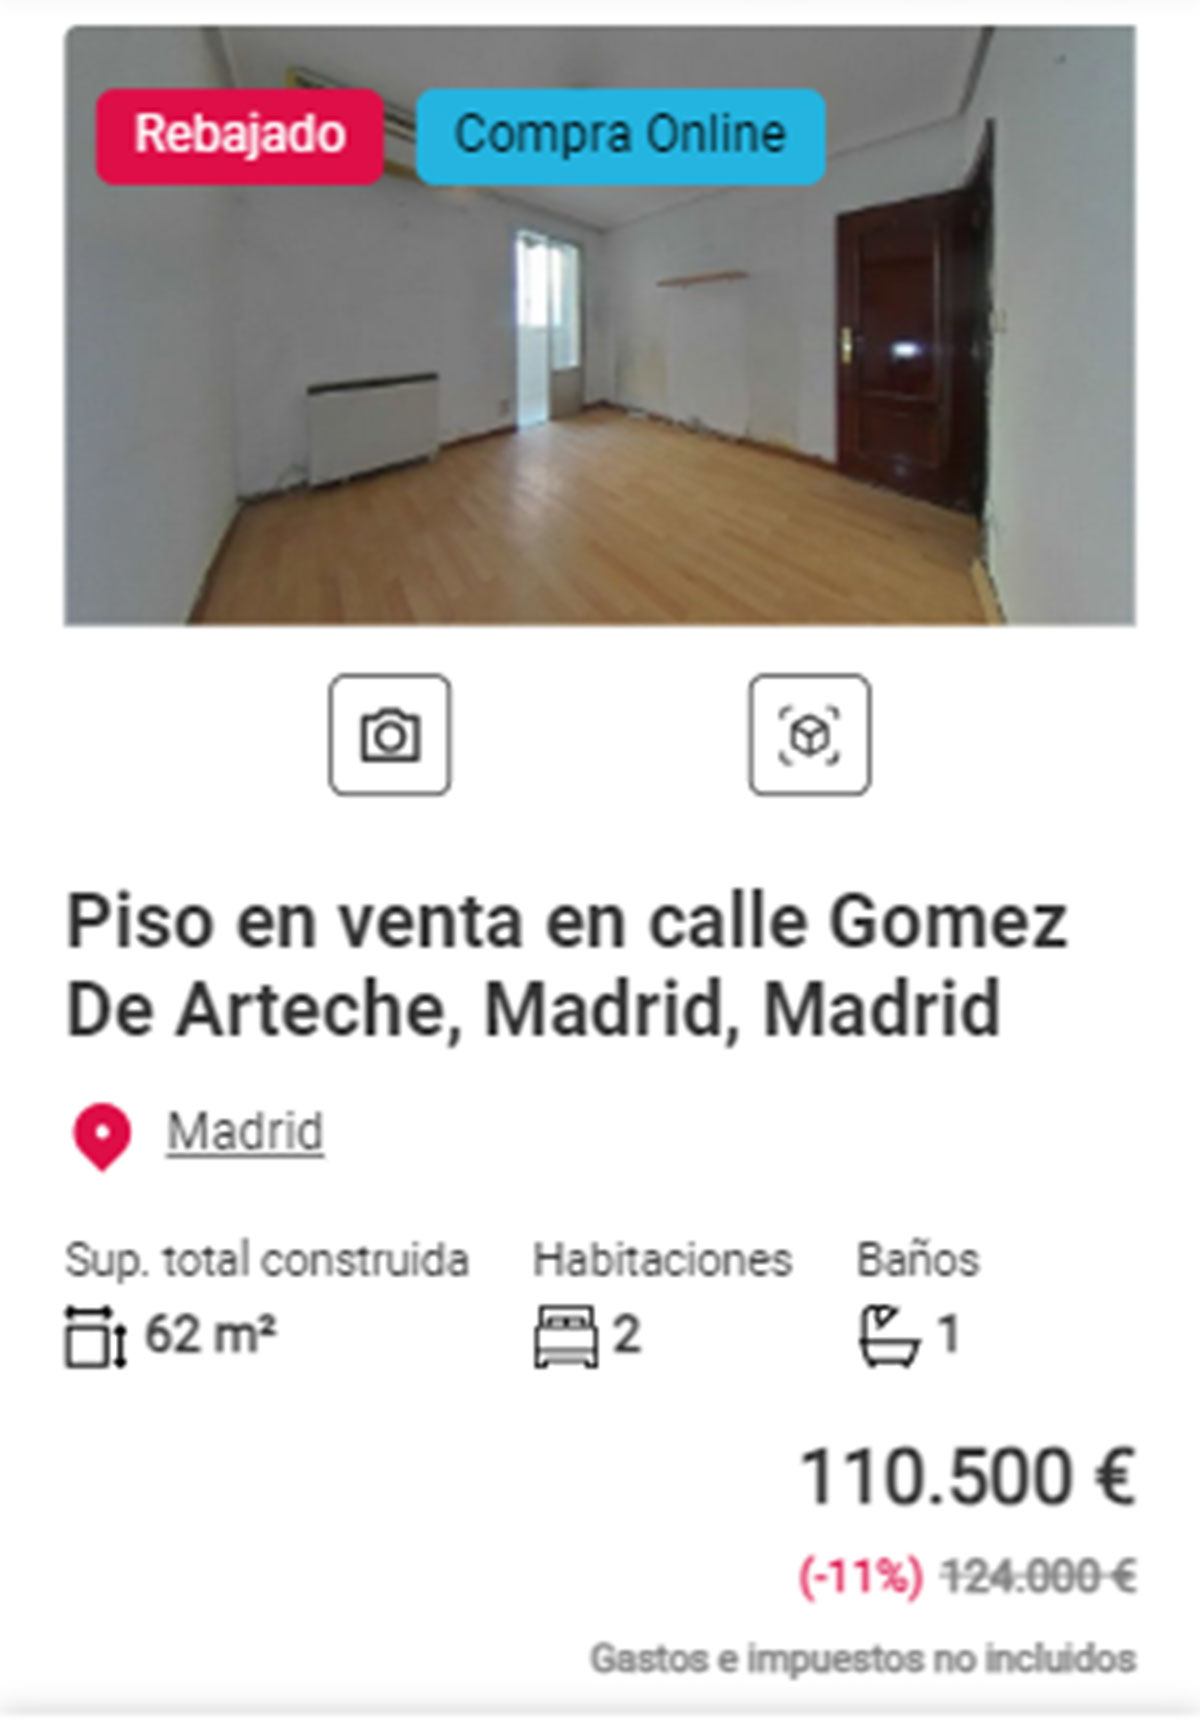 Piso con descuento en Madrid por 110.000 euros